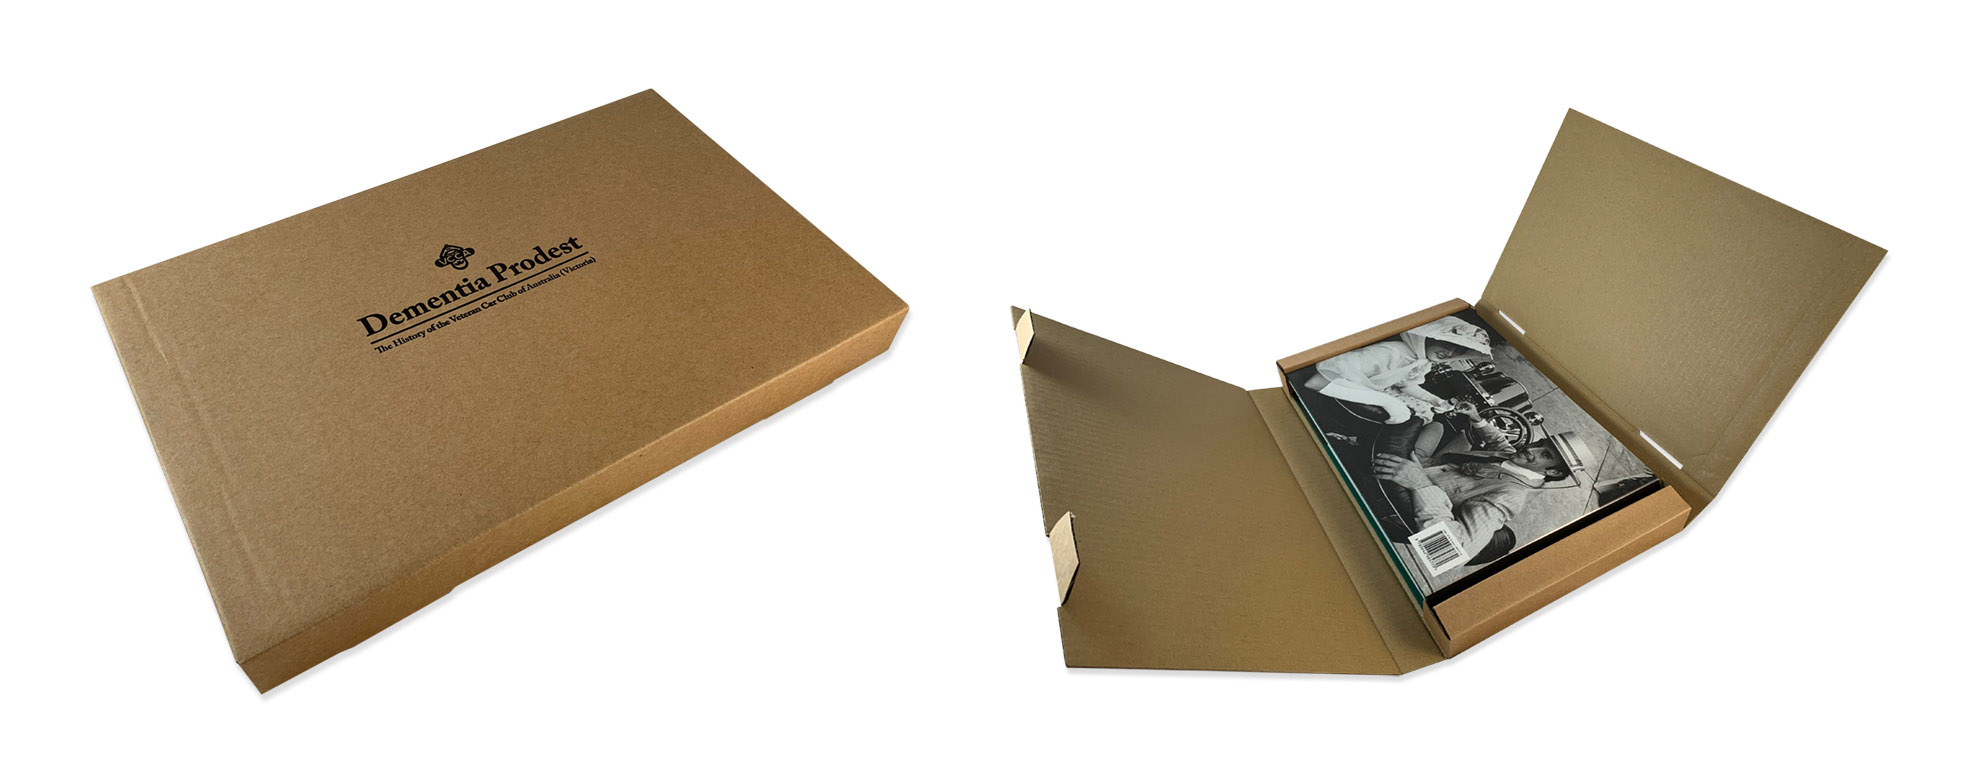 Dementia Prodest, Mailing Carton, Packaging Design